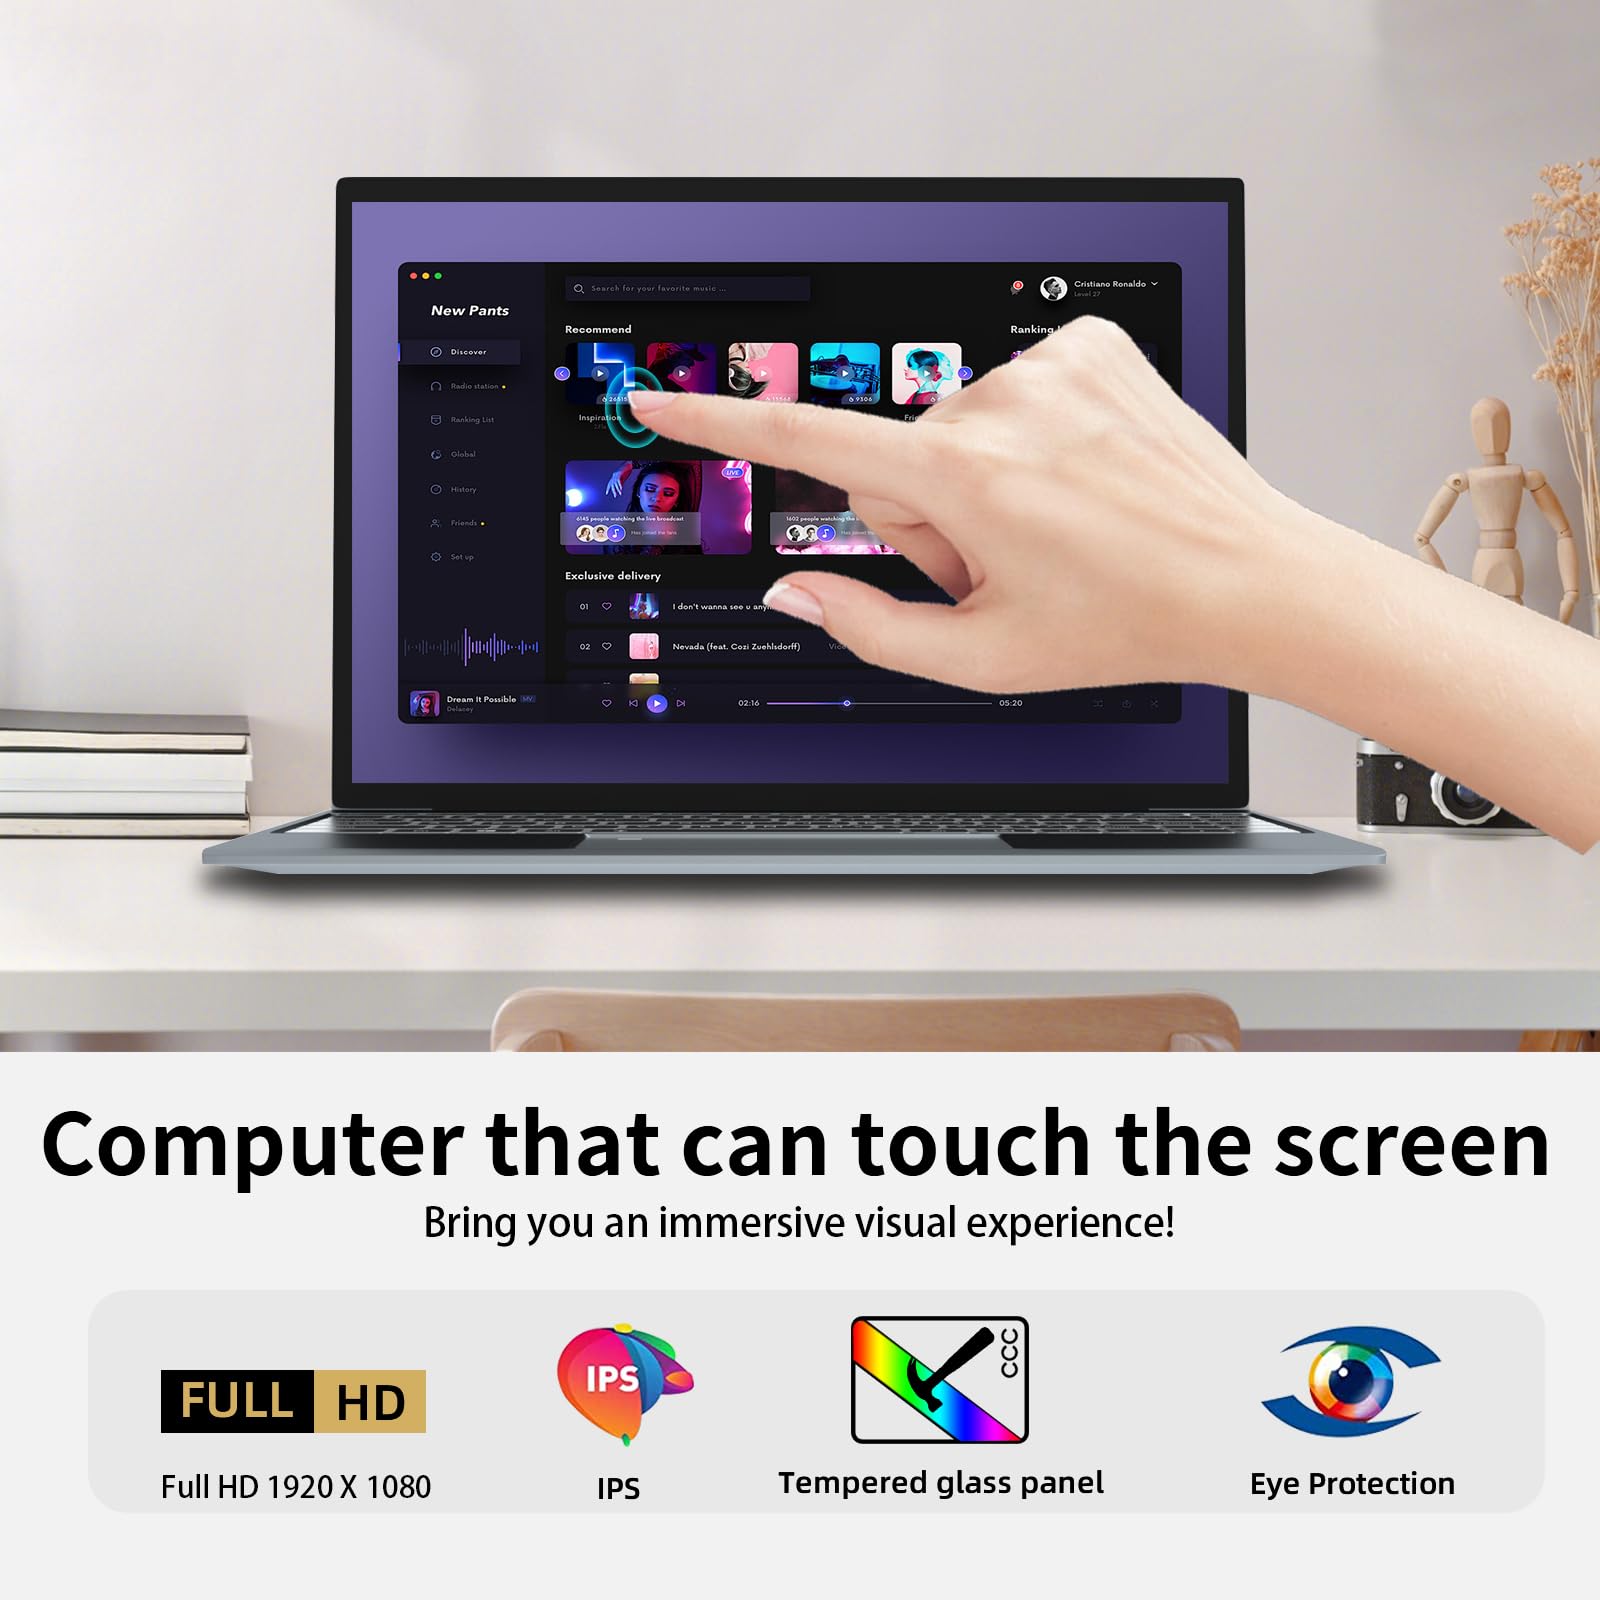 Morostron 15.6" Touch Screen Laptop 16GB RAM 1TB SSD 1080P FHD, Win11 Quad-Core Processor, Full Metal Laptop with Backlit Keyboard & Finger Print Touch ID, AC WiFi, WPS, Mini HDMI, USB 3.0